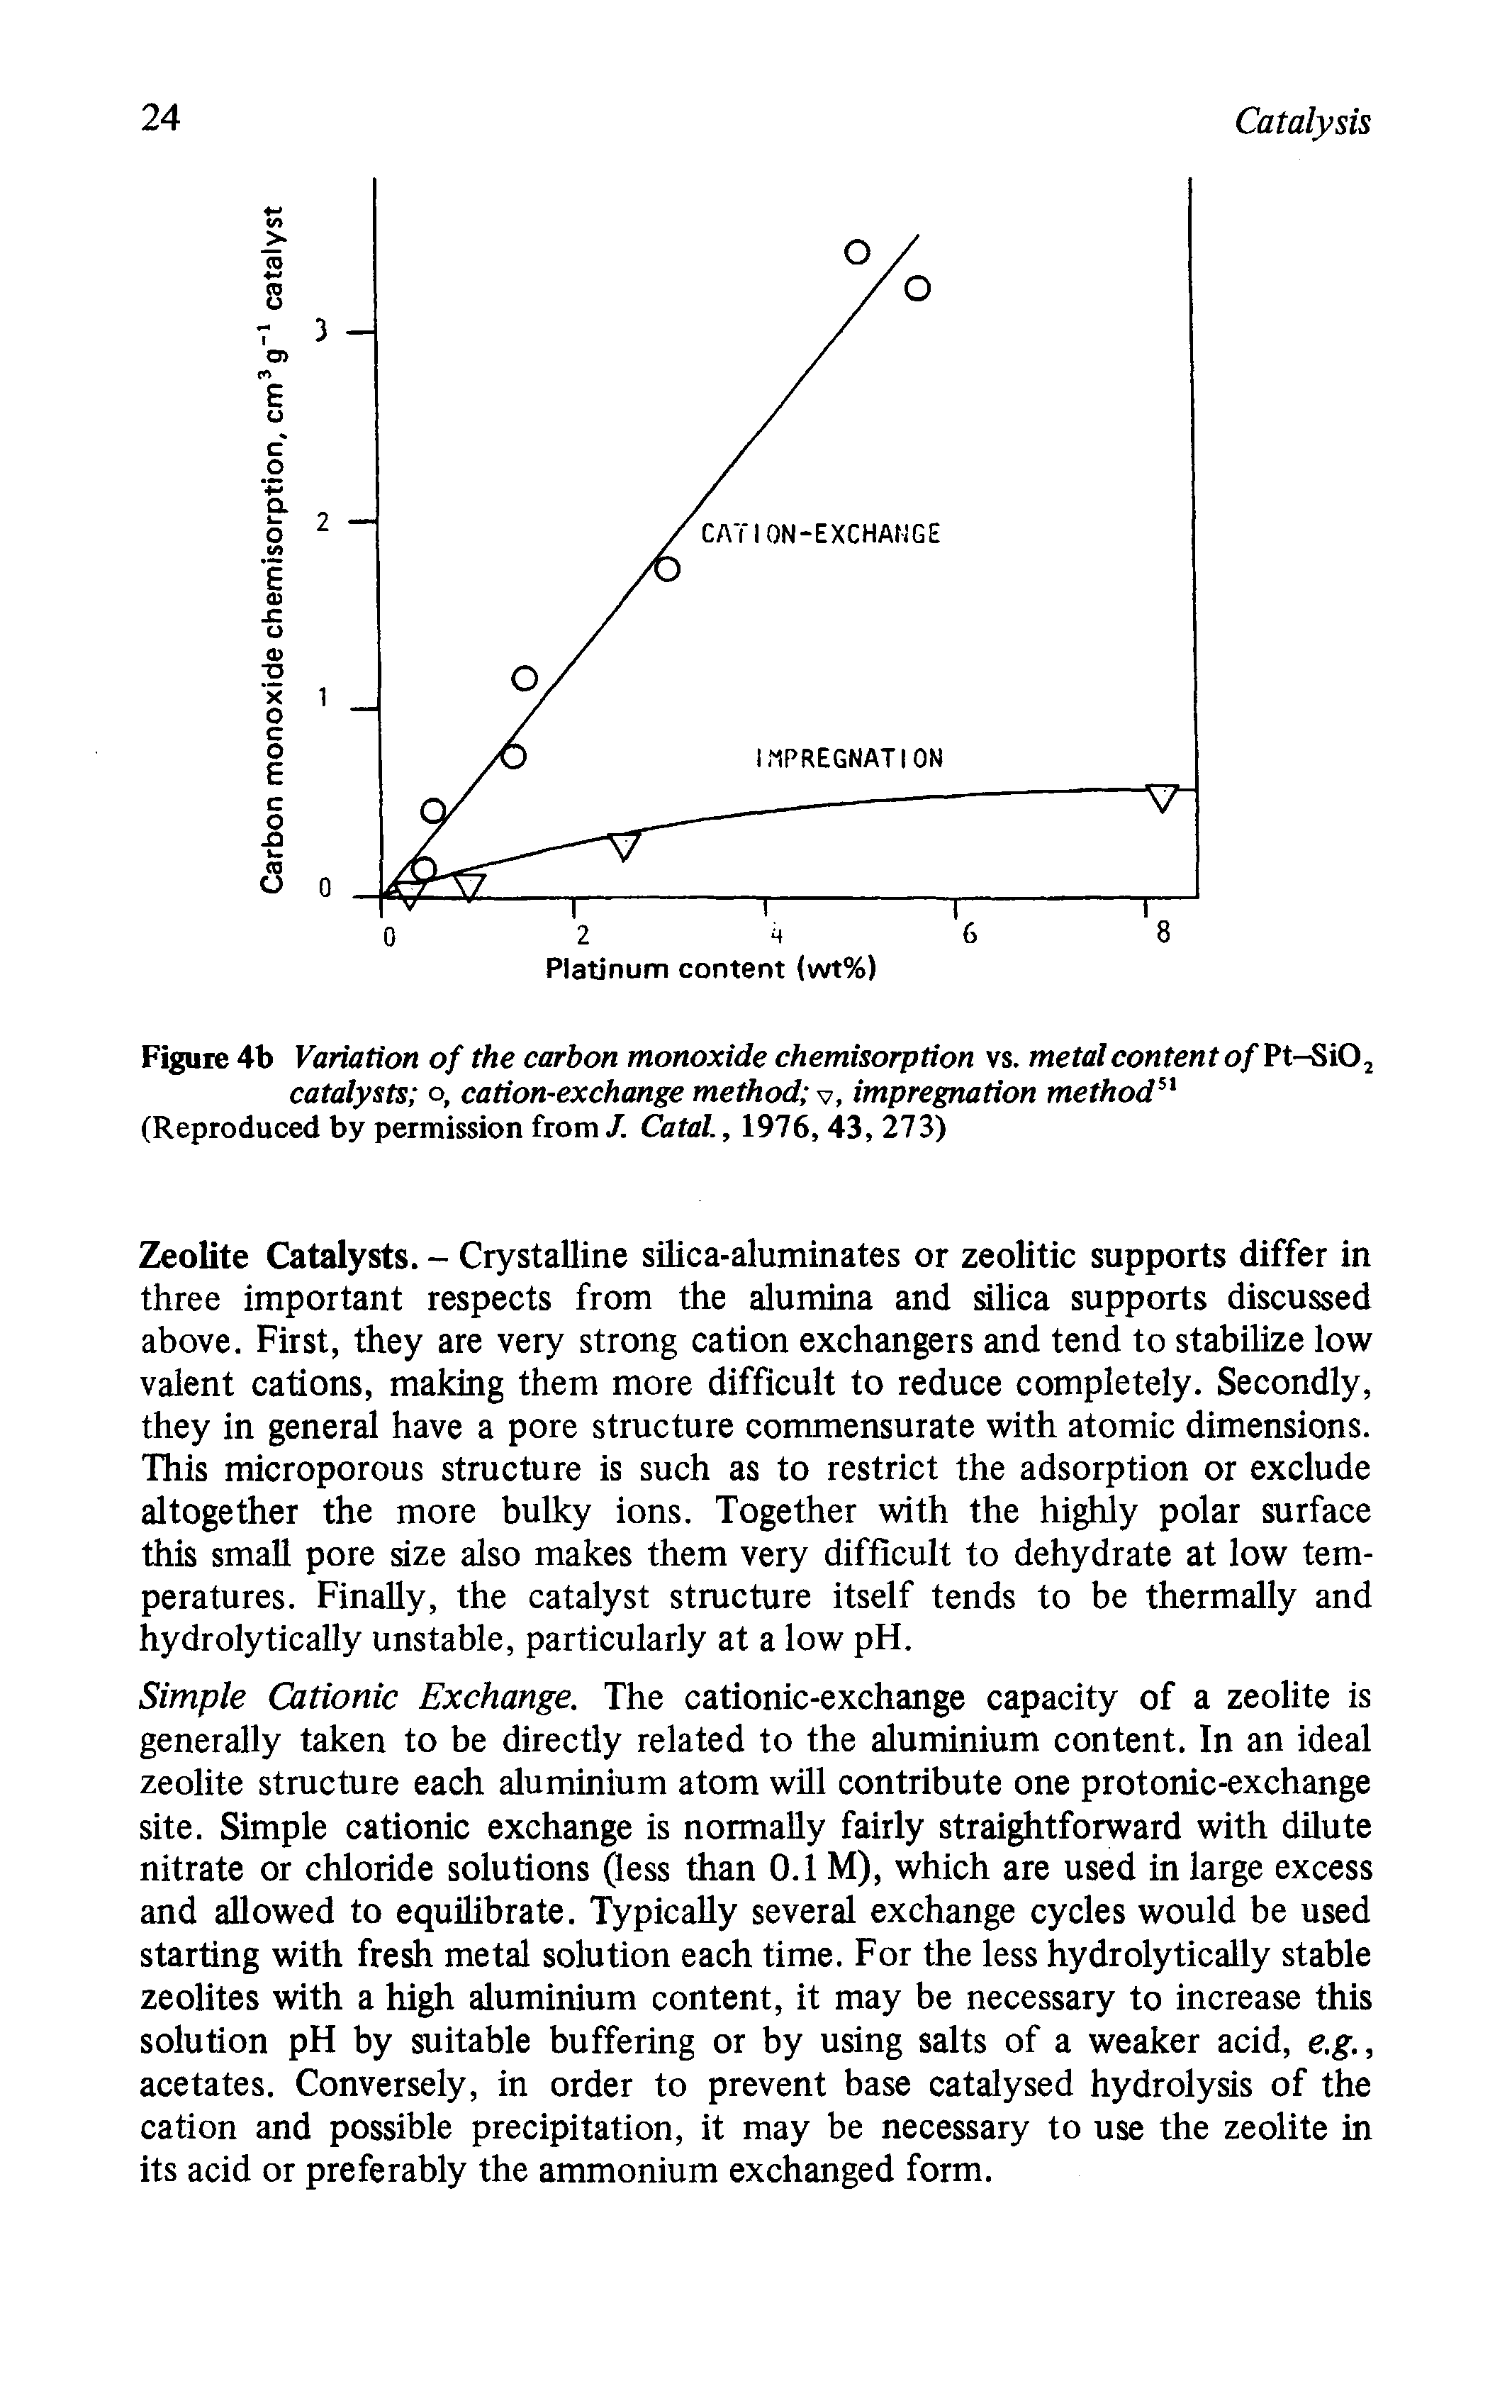 Figure 4b Variation of the carbon monoxide chemisorption vs. metalco fenfo/Pt-SiO catalysts o, cation-exchange method v, impregnation method ...